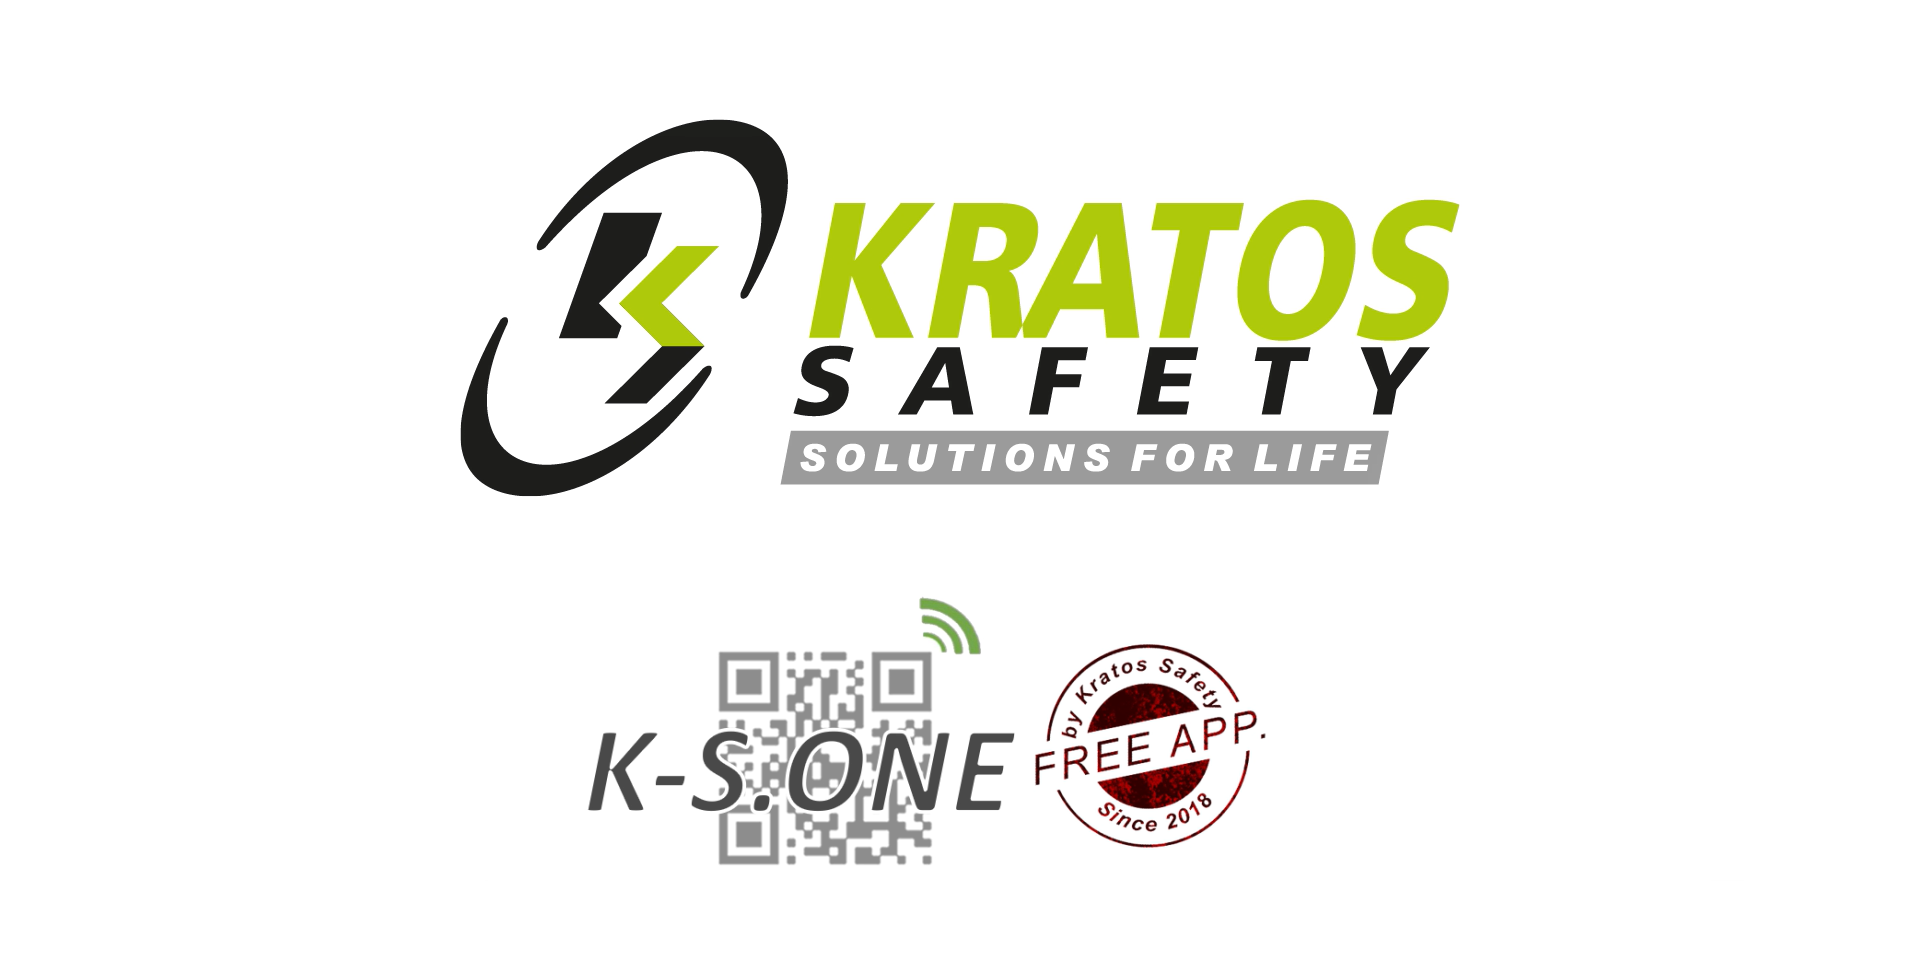 kratoss Safety